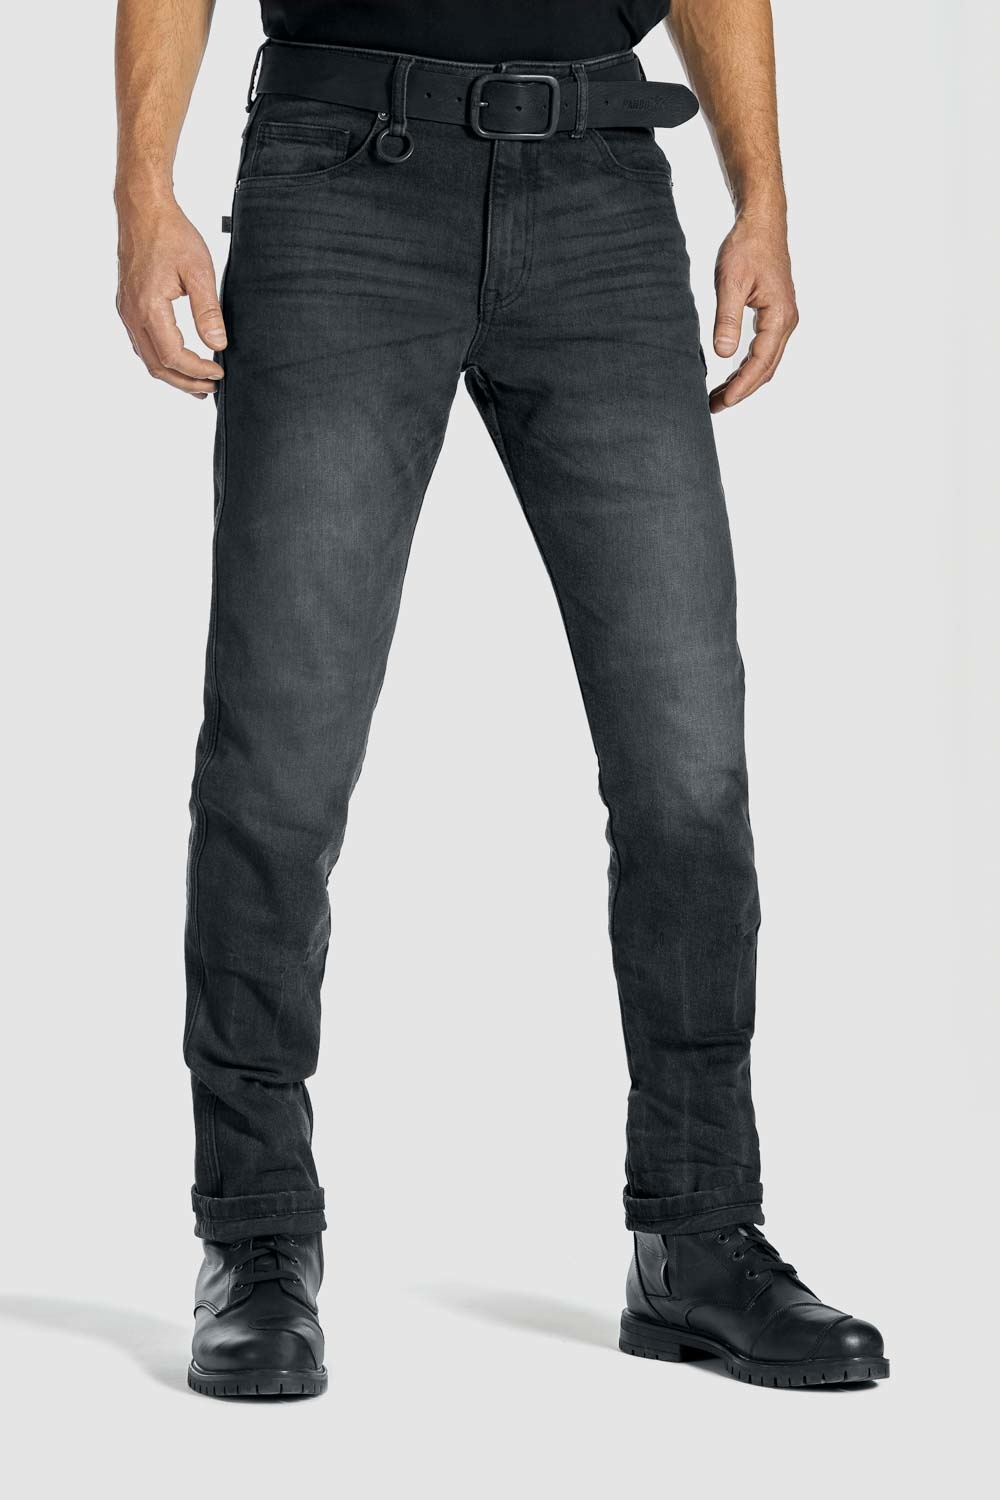 Pando Moto Robby Cor 01 - Slim-Fit Cordura® motorcycle jeans for men ...